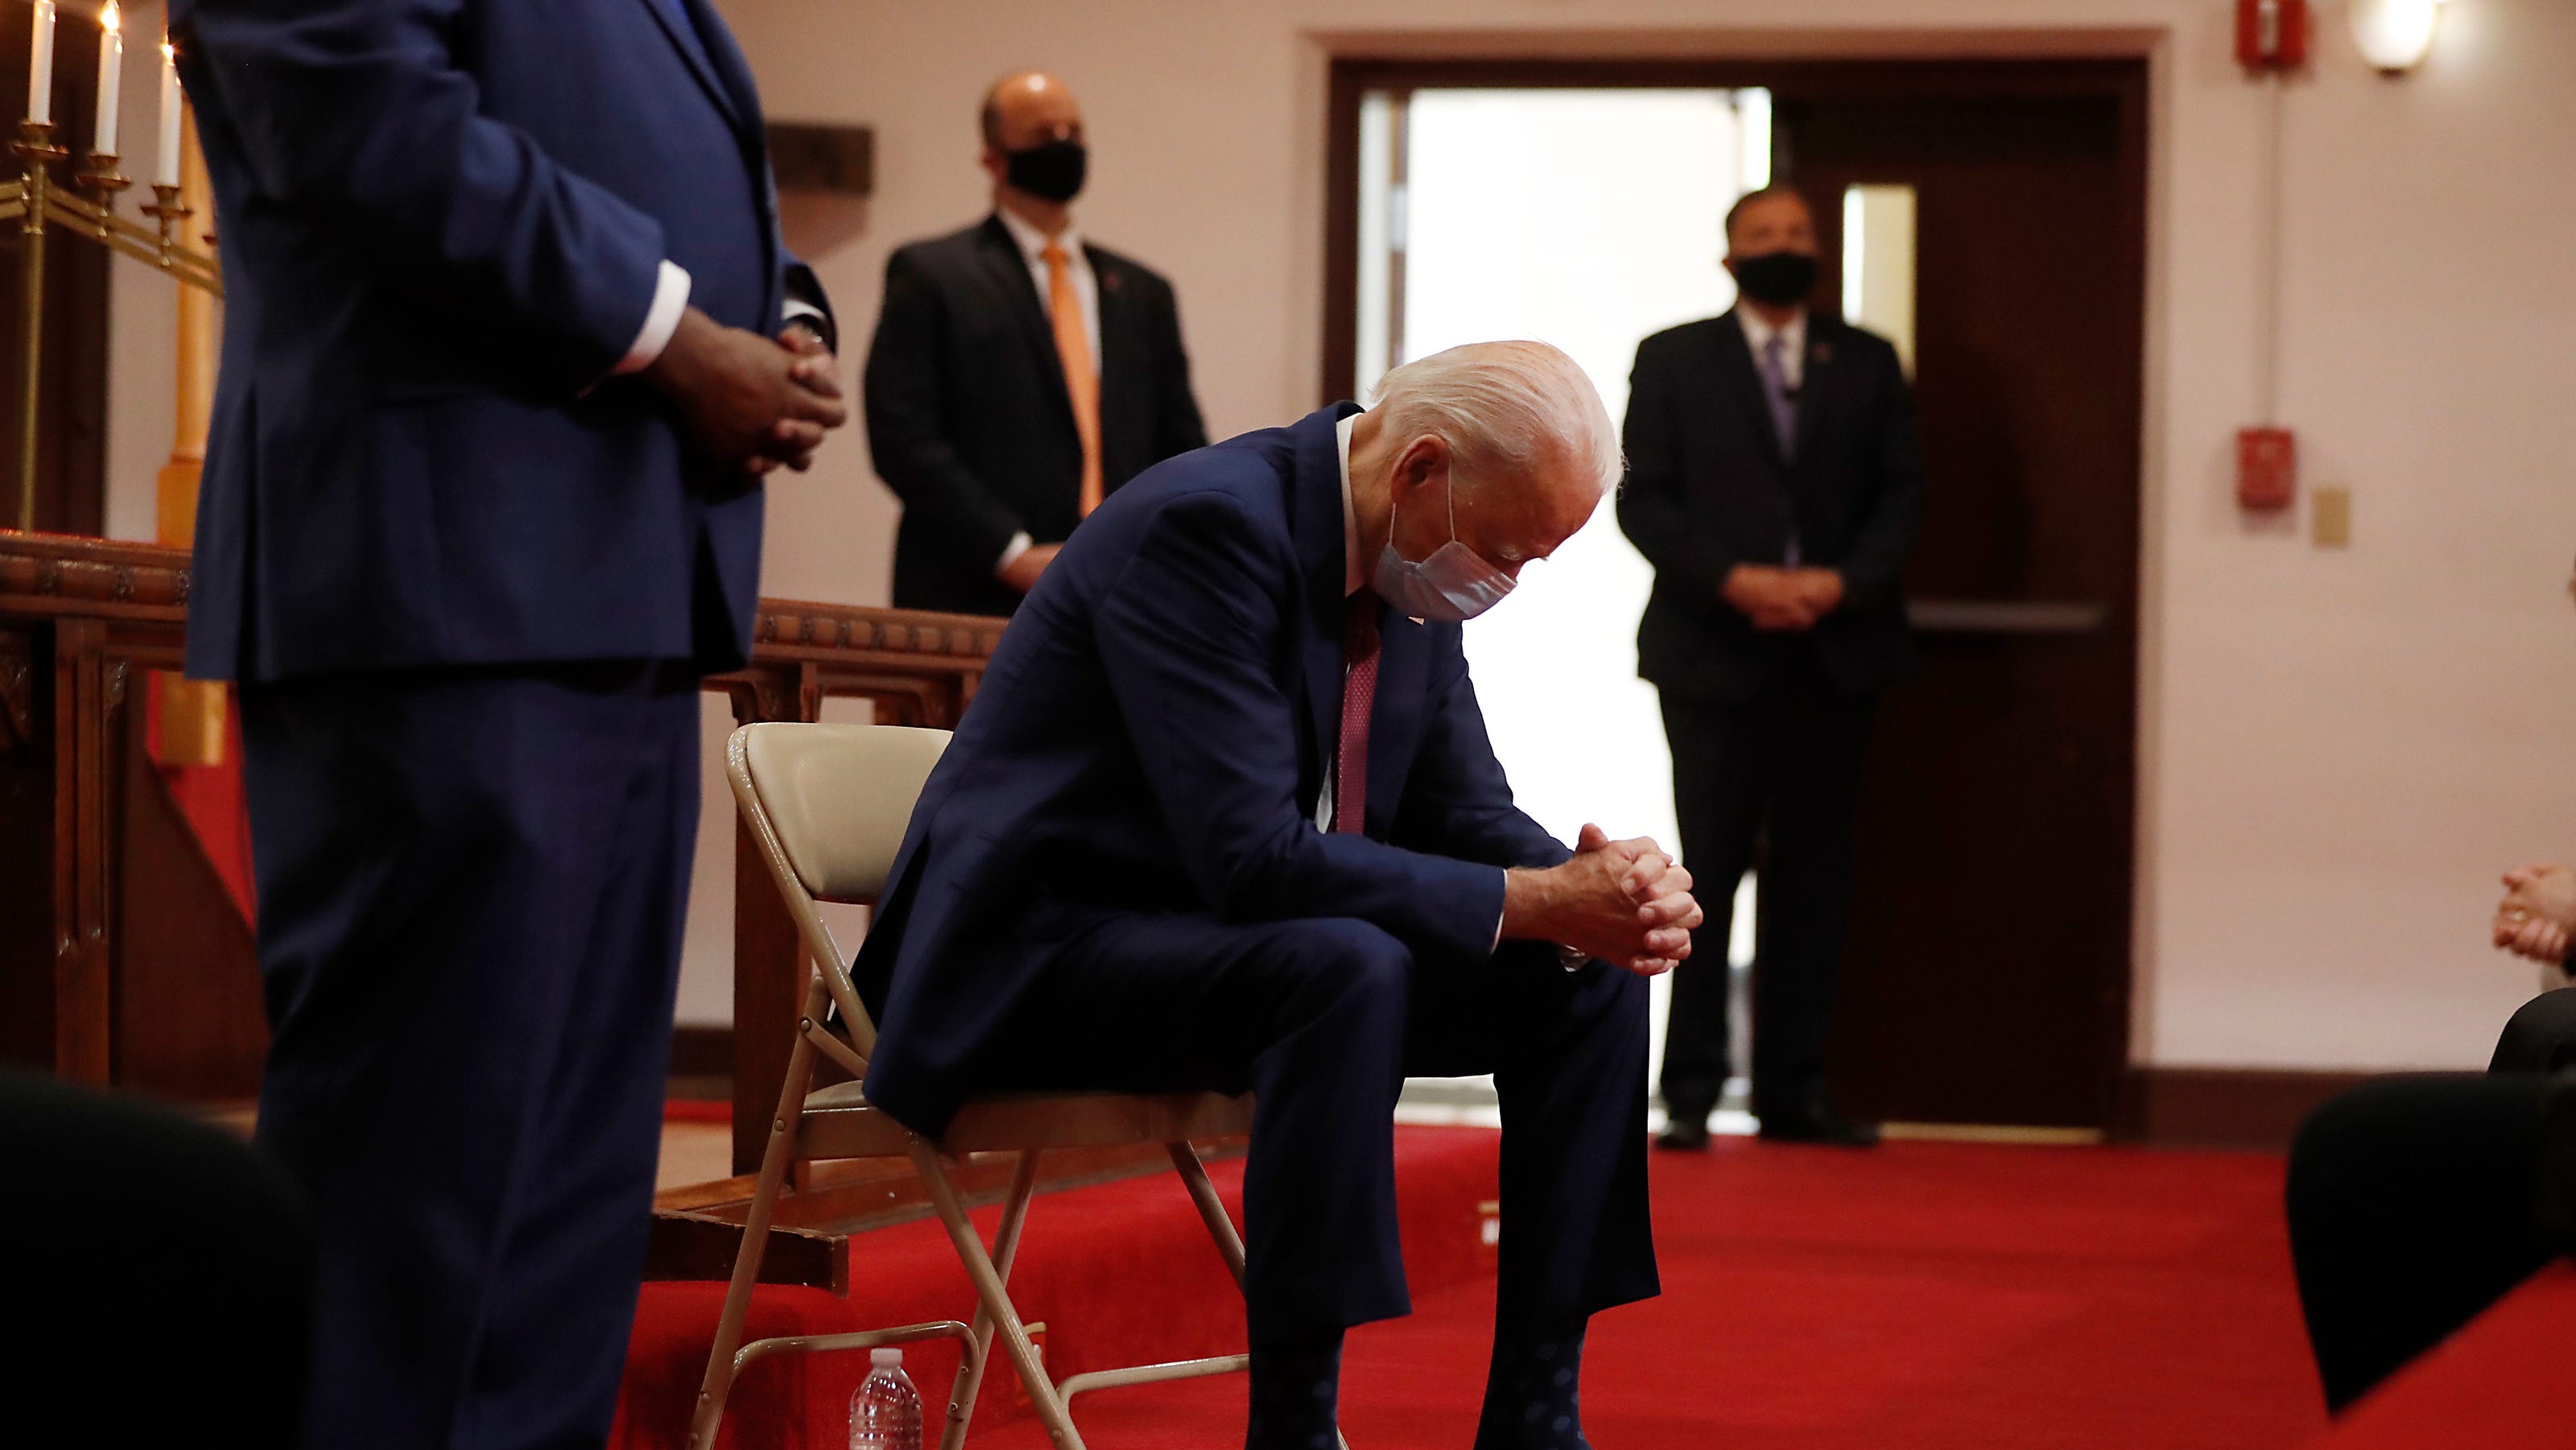 Biden emphasizes faith at National Prayer Breakfast without Trump